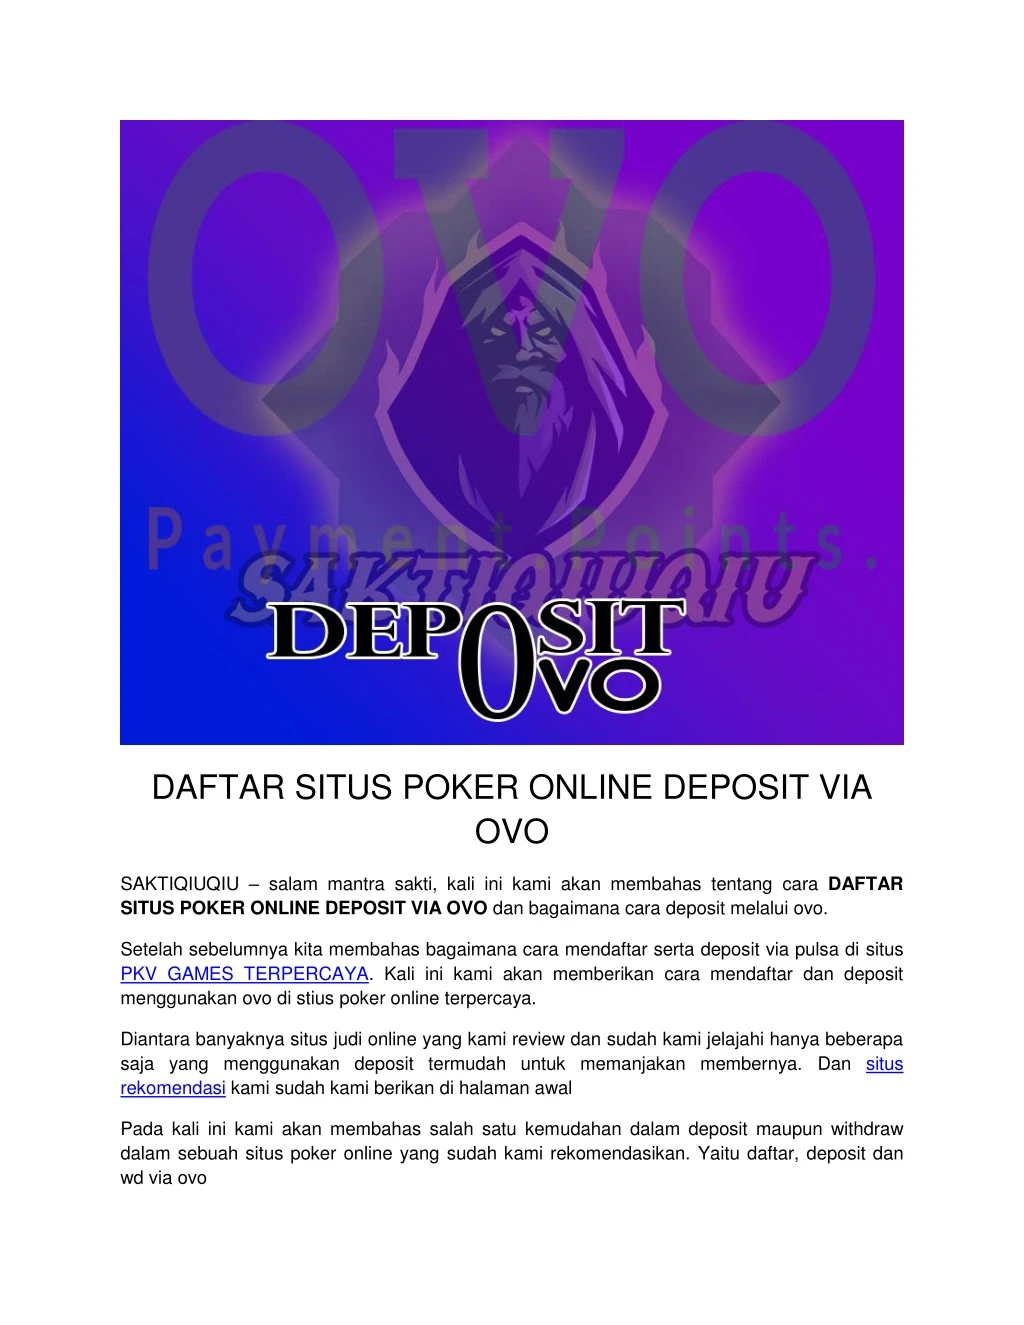 daftar situs poker online deposit via ovo